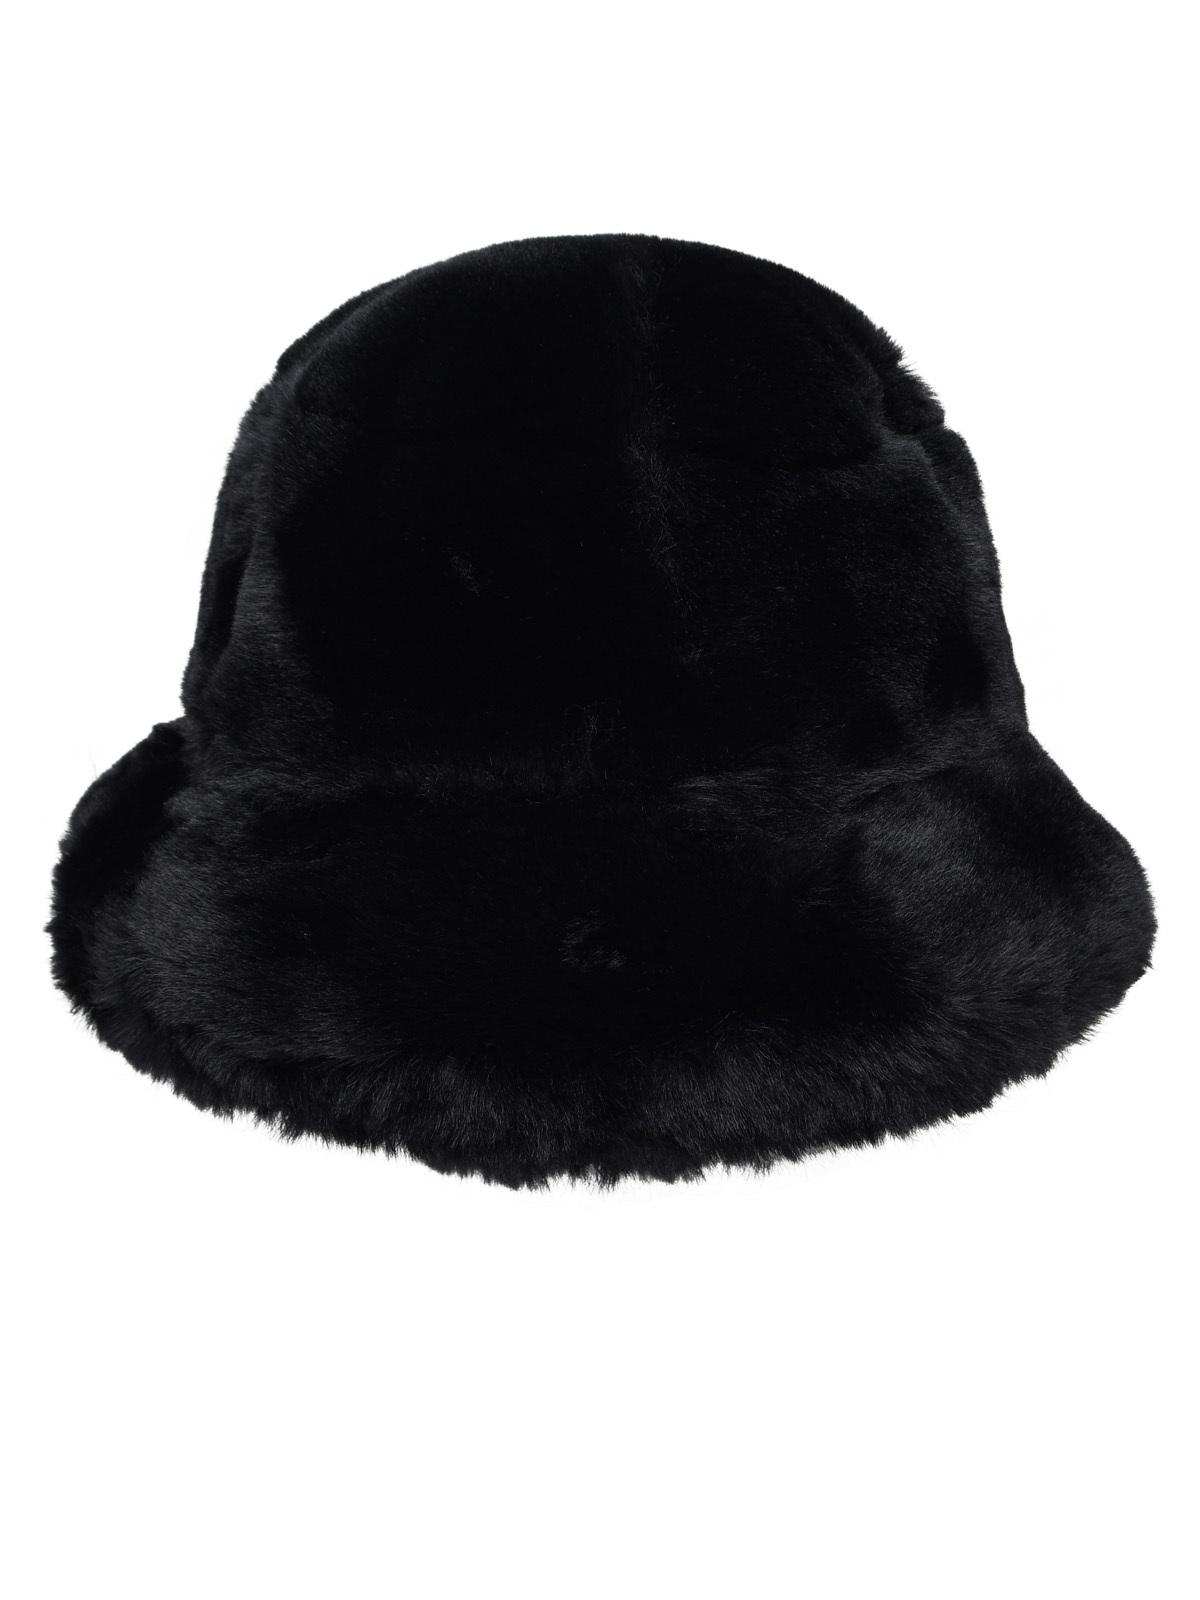 Moose Knuckles Sackett Black Polyester Hat Woman